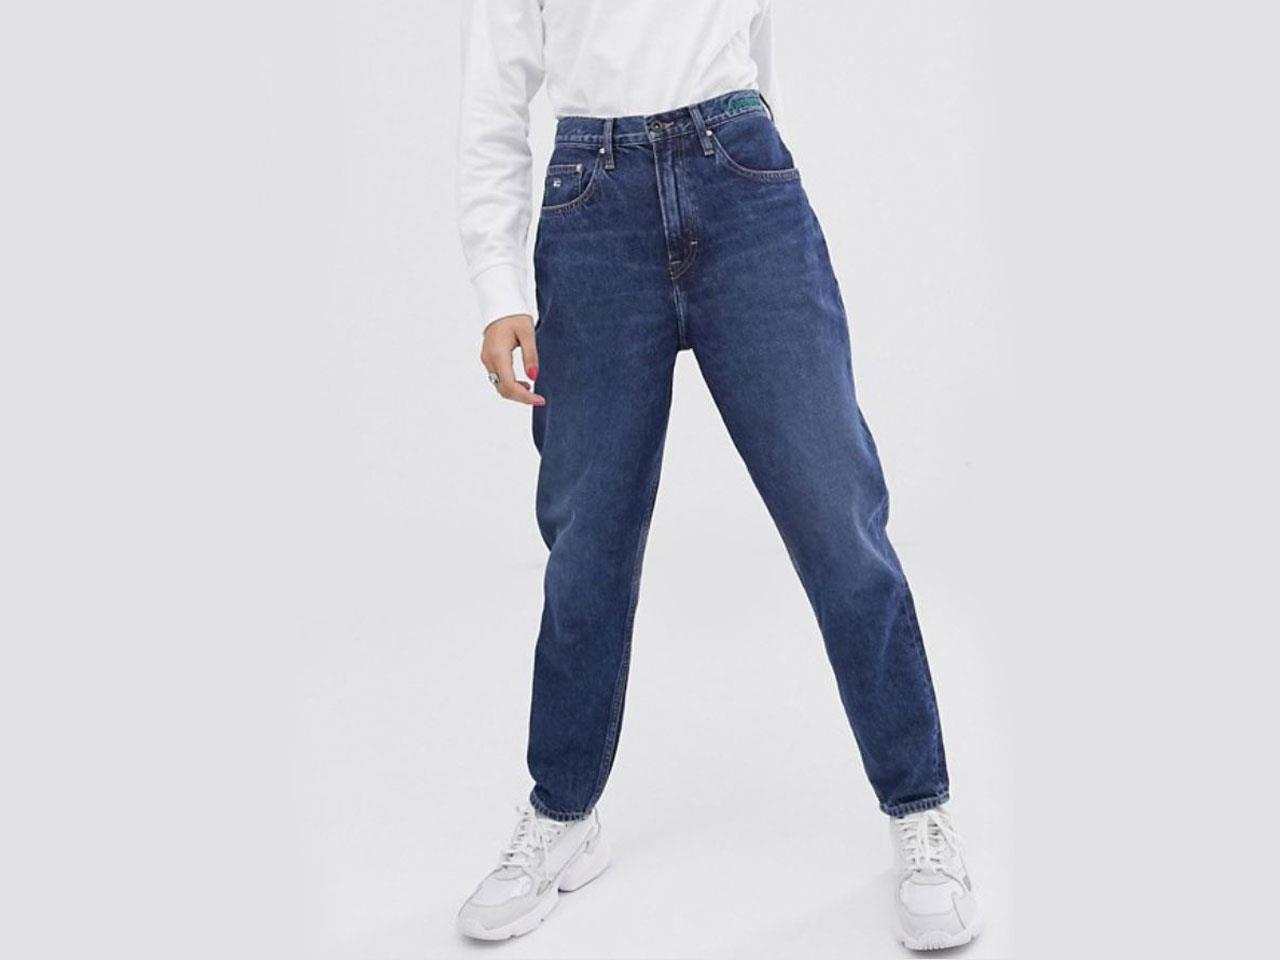 claves prendas otoño invierno 2019 2020 pantalones Tommy Jeans, 106,99€